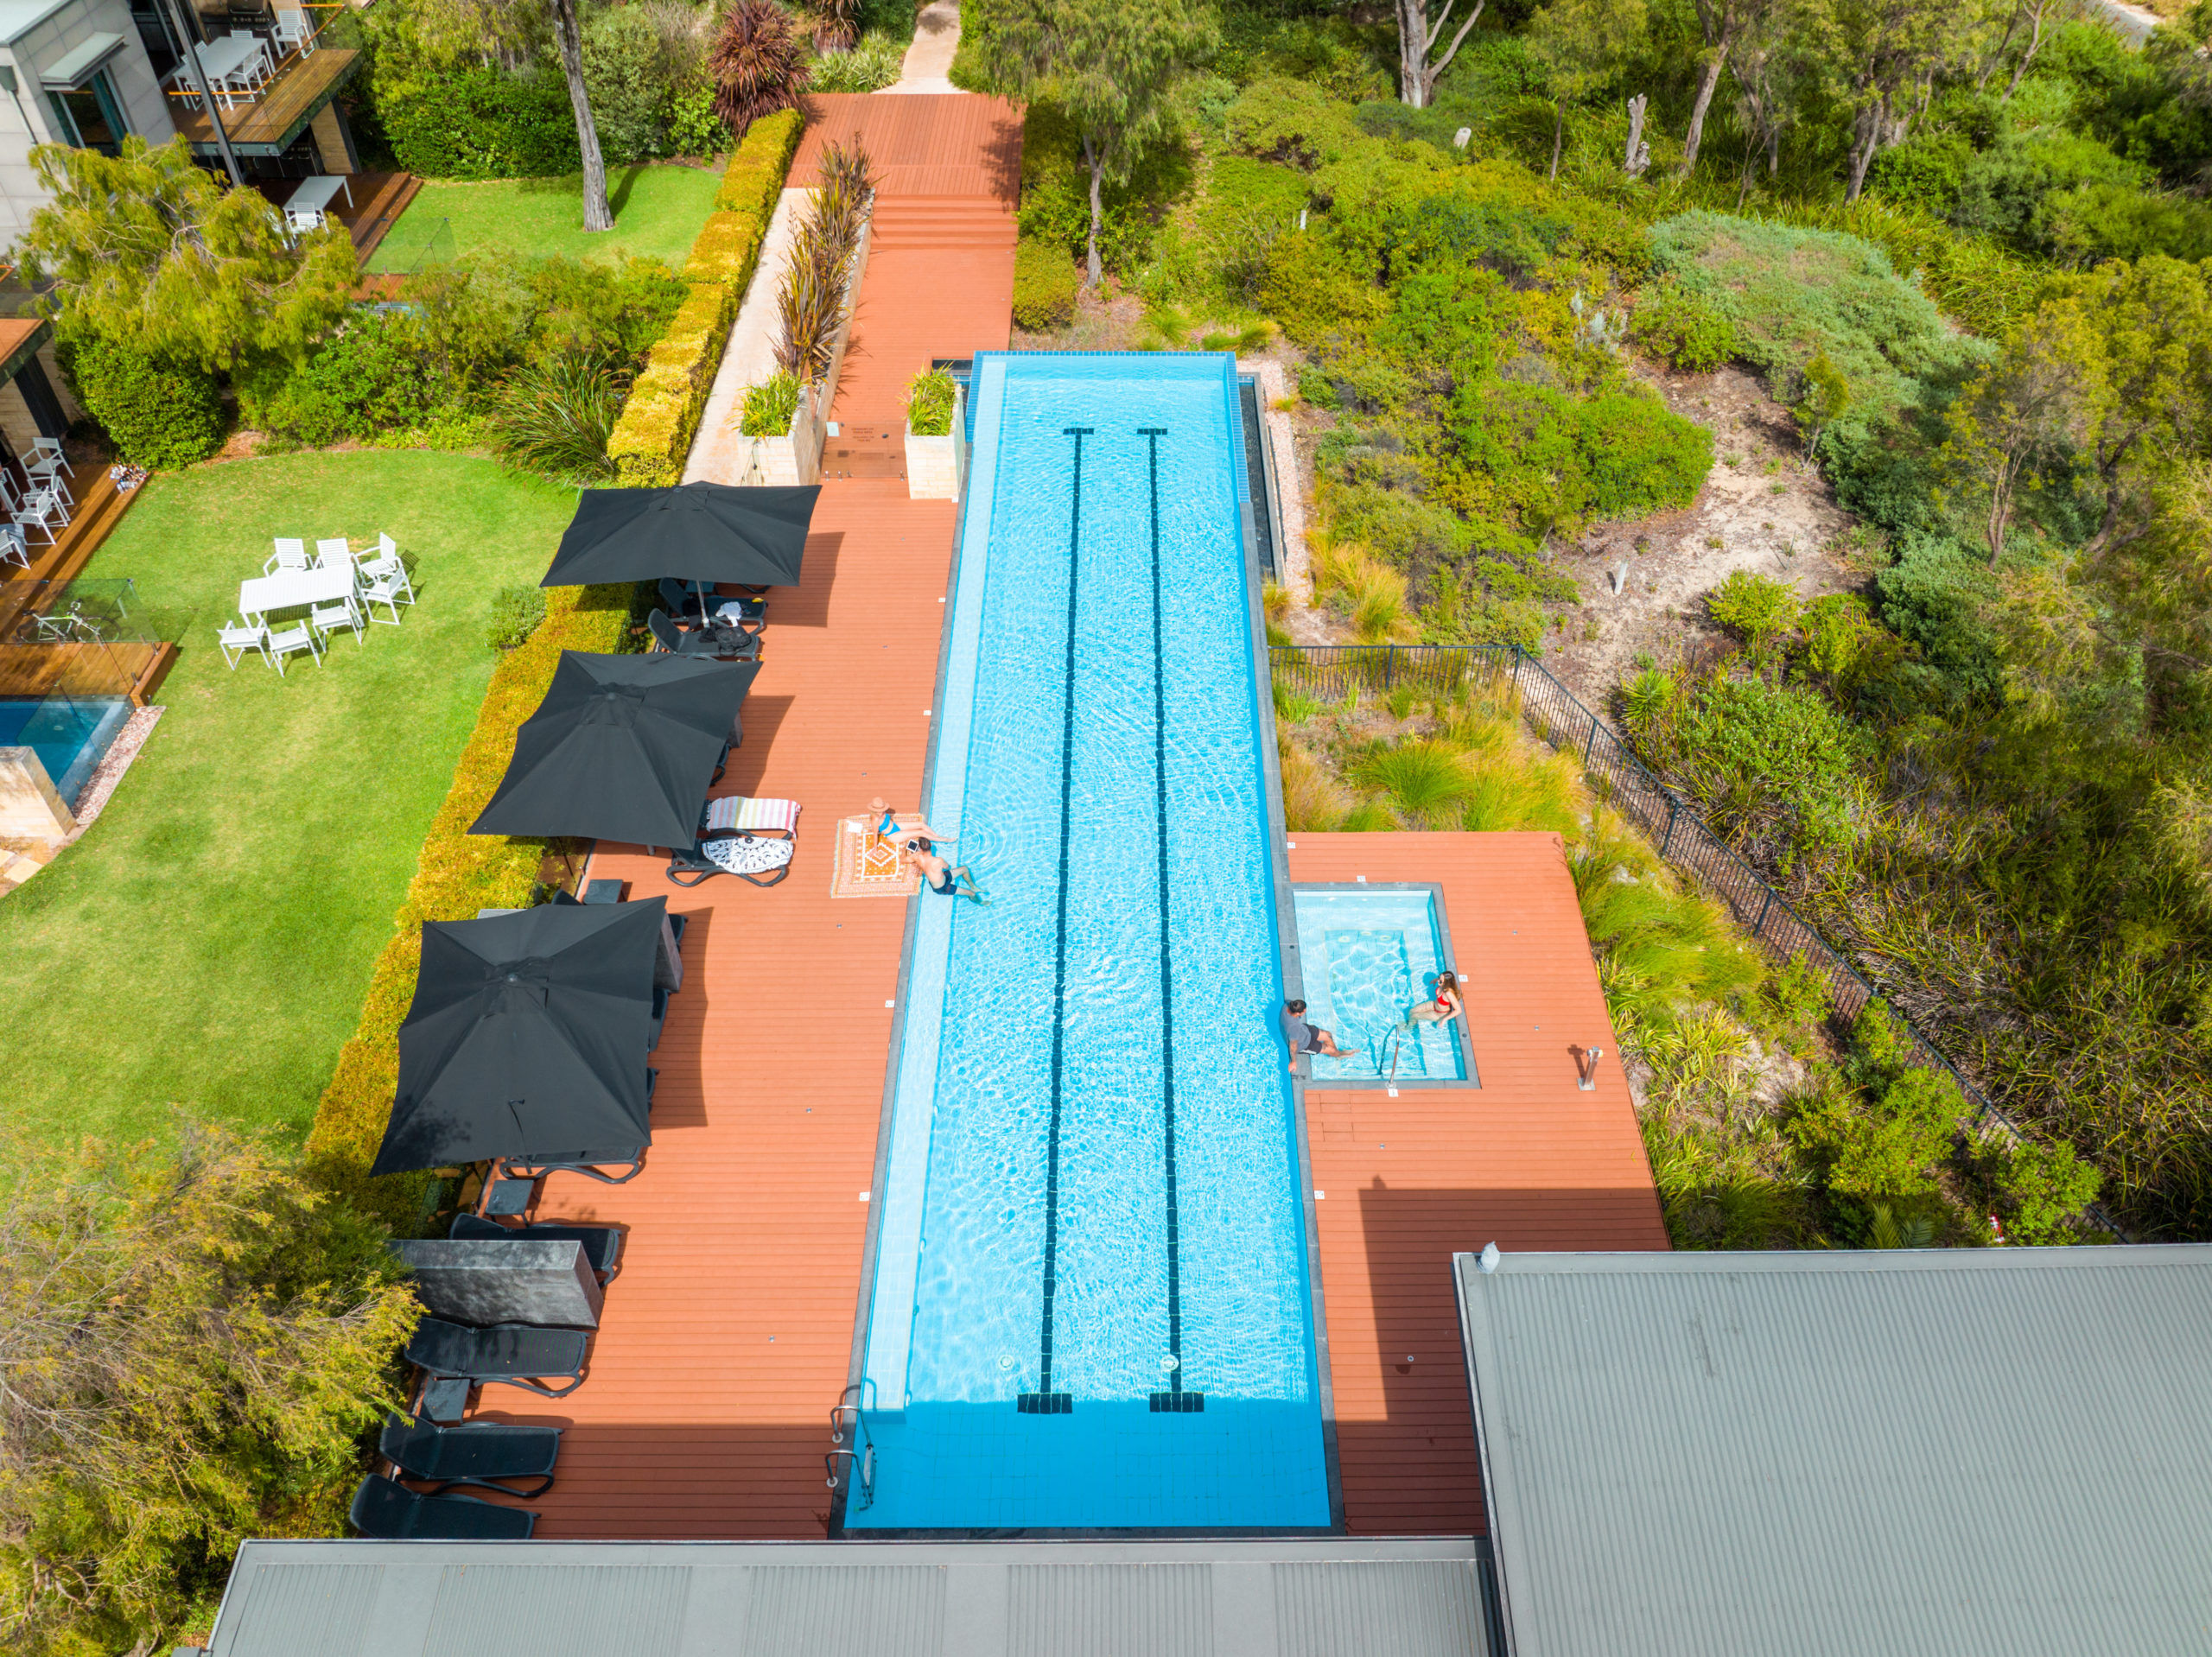 Accommodation with a swimming pool: Aqua Resort Busselton. Credit Matt Deakin.